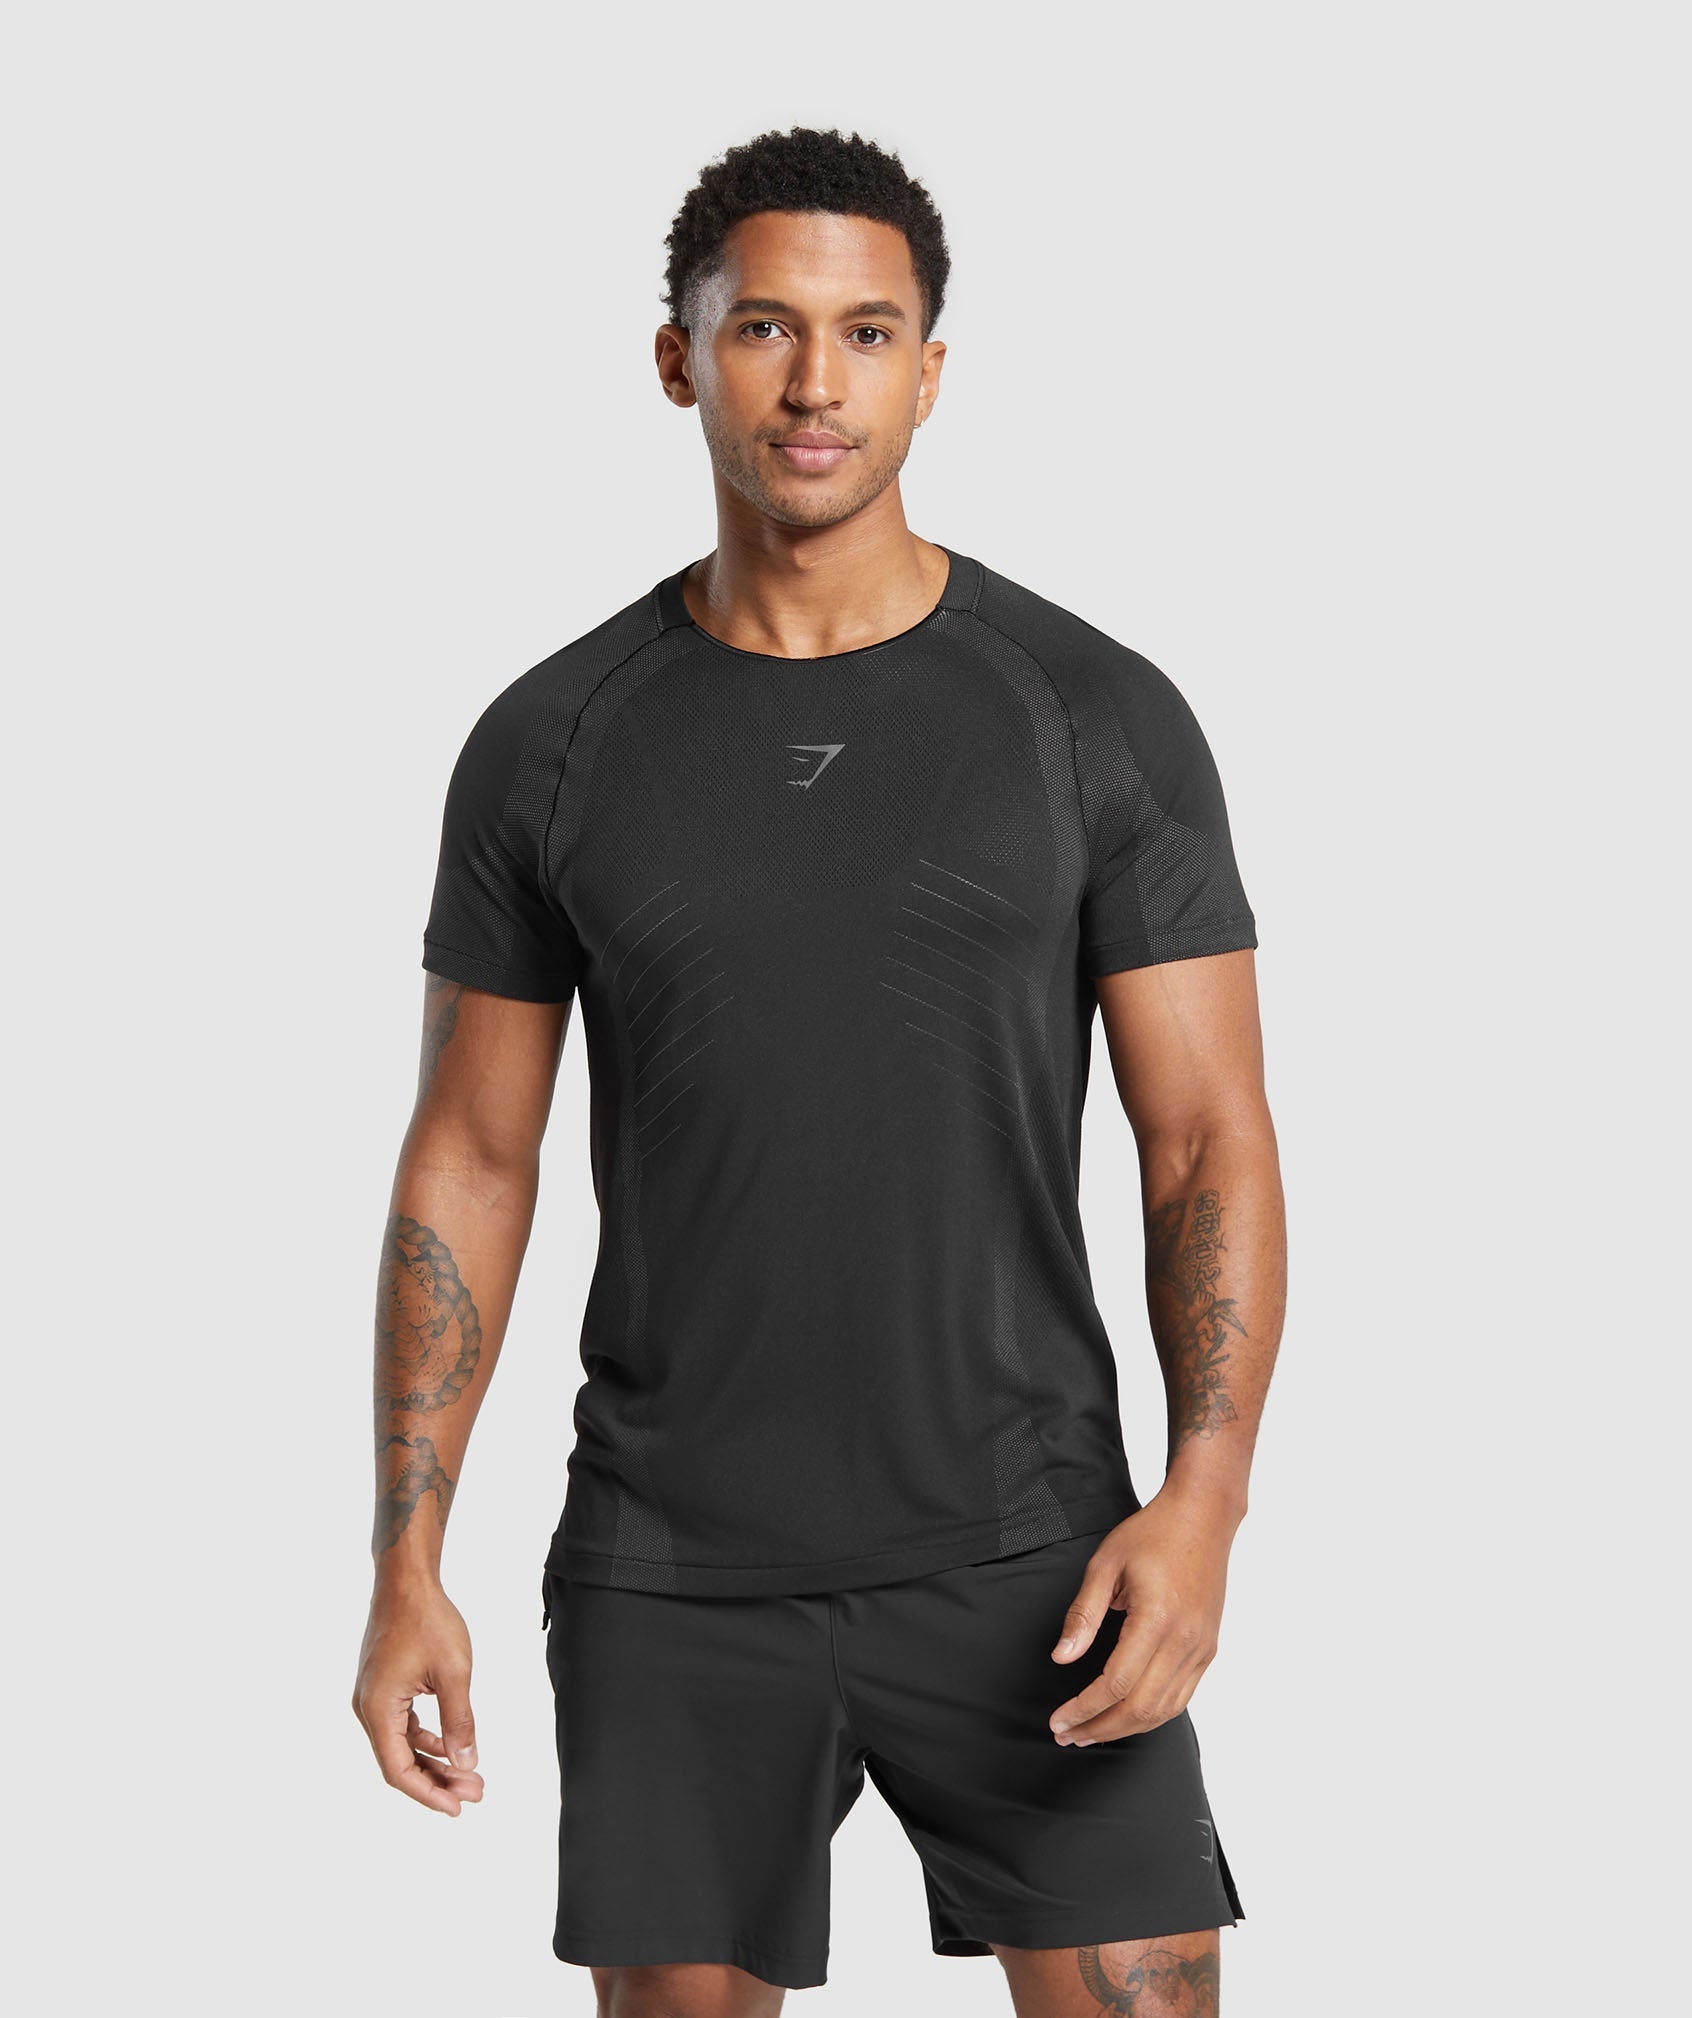 Apex Seamless T-Shirt in Black/Dark Grey